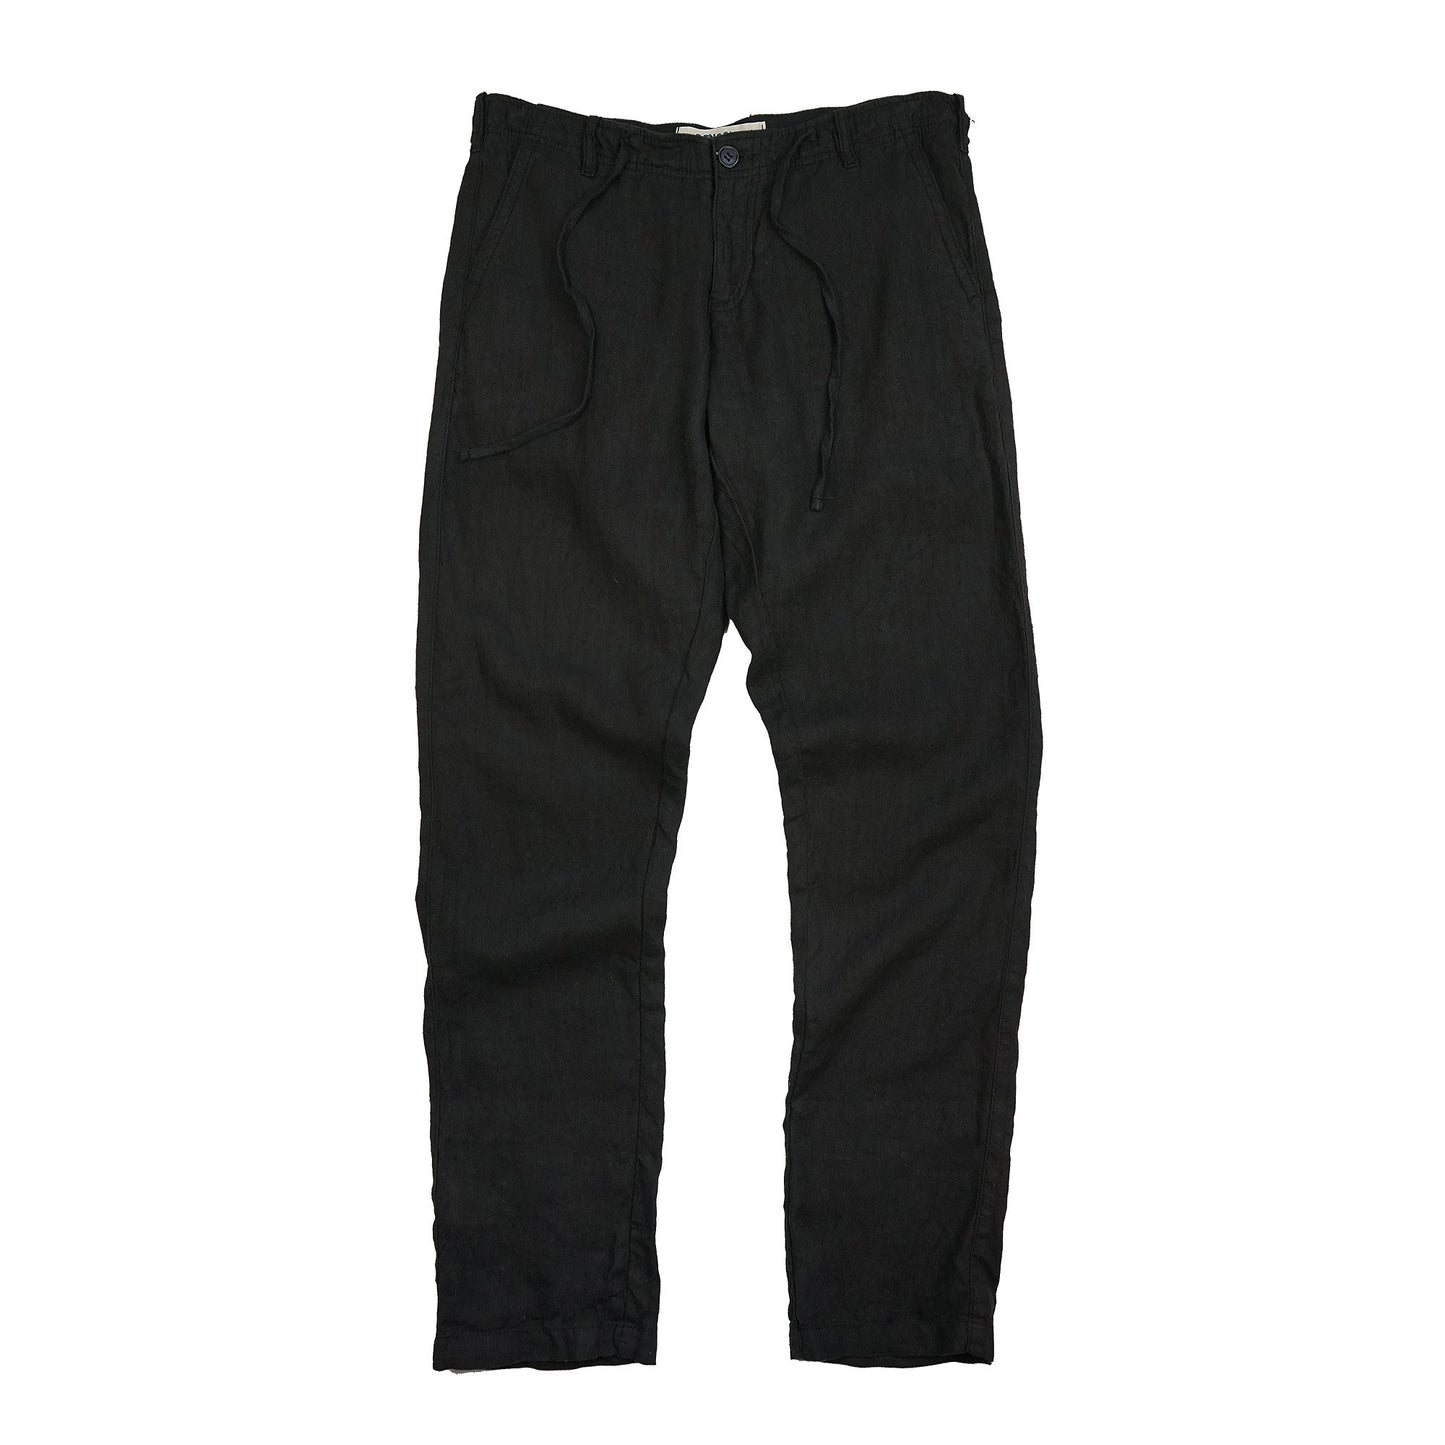 Key West Black Linen Pants